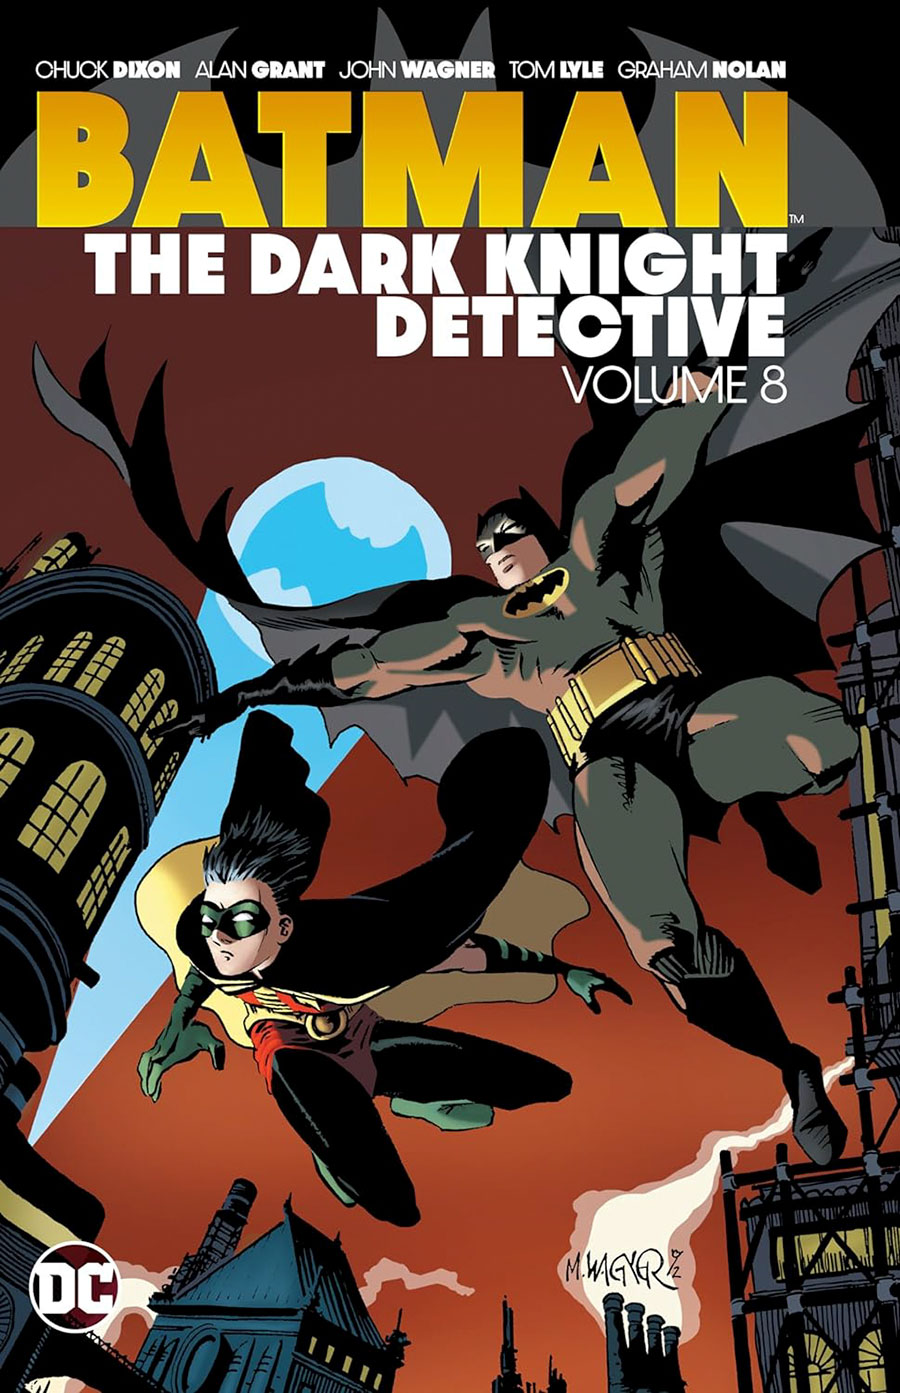 Batman The Dark Knight Detective Vol 8 TP